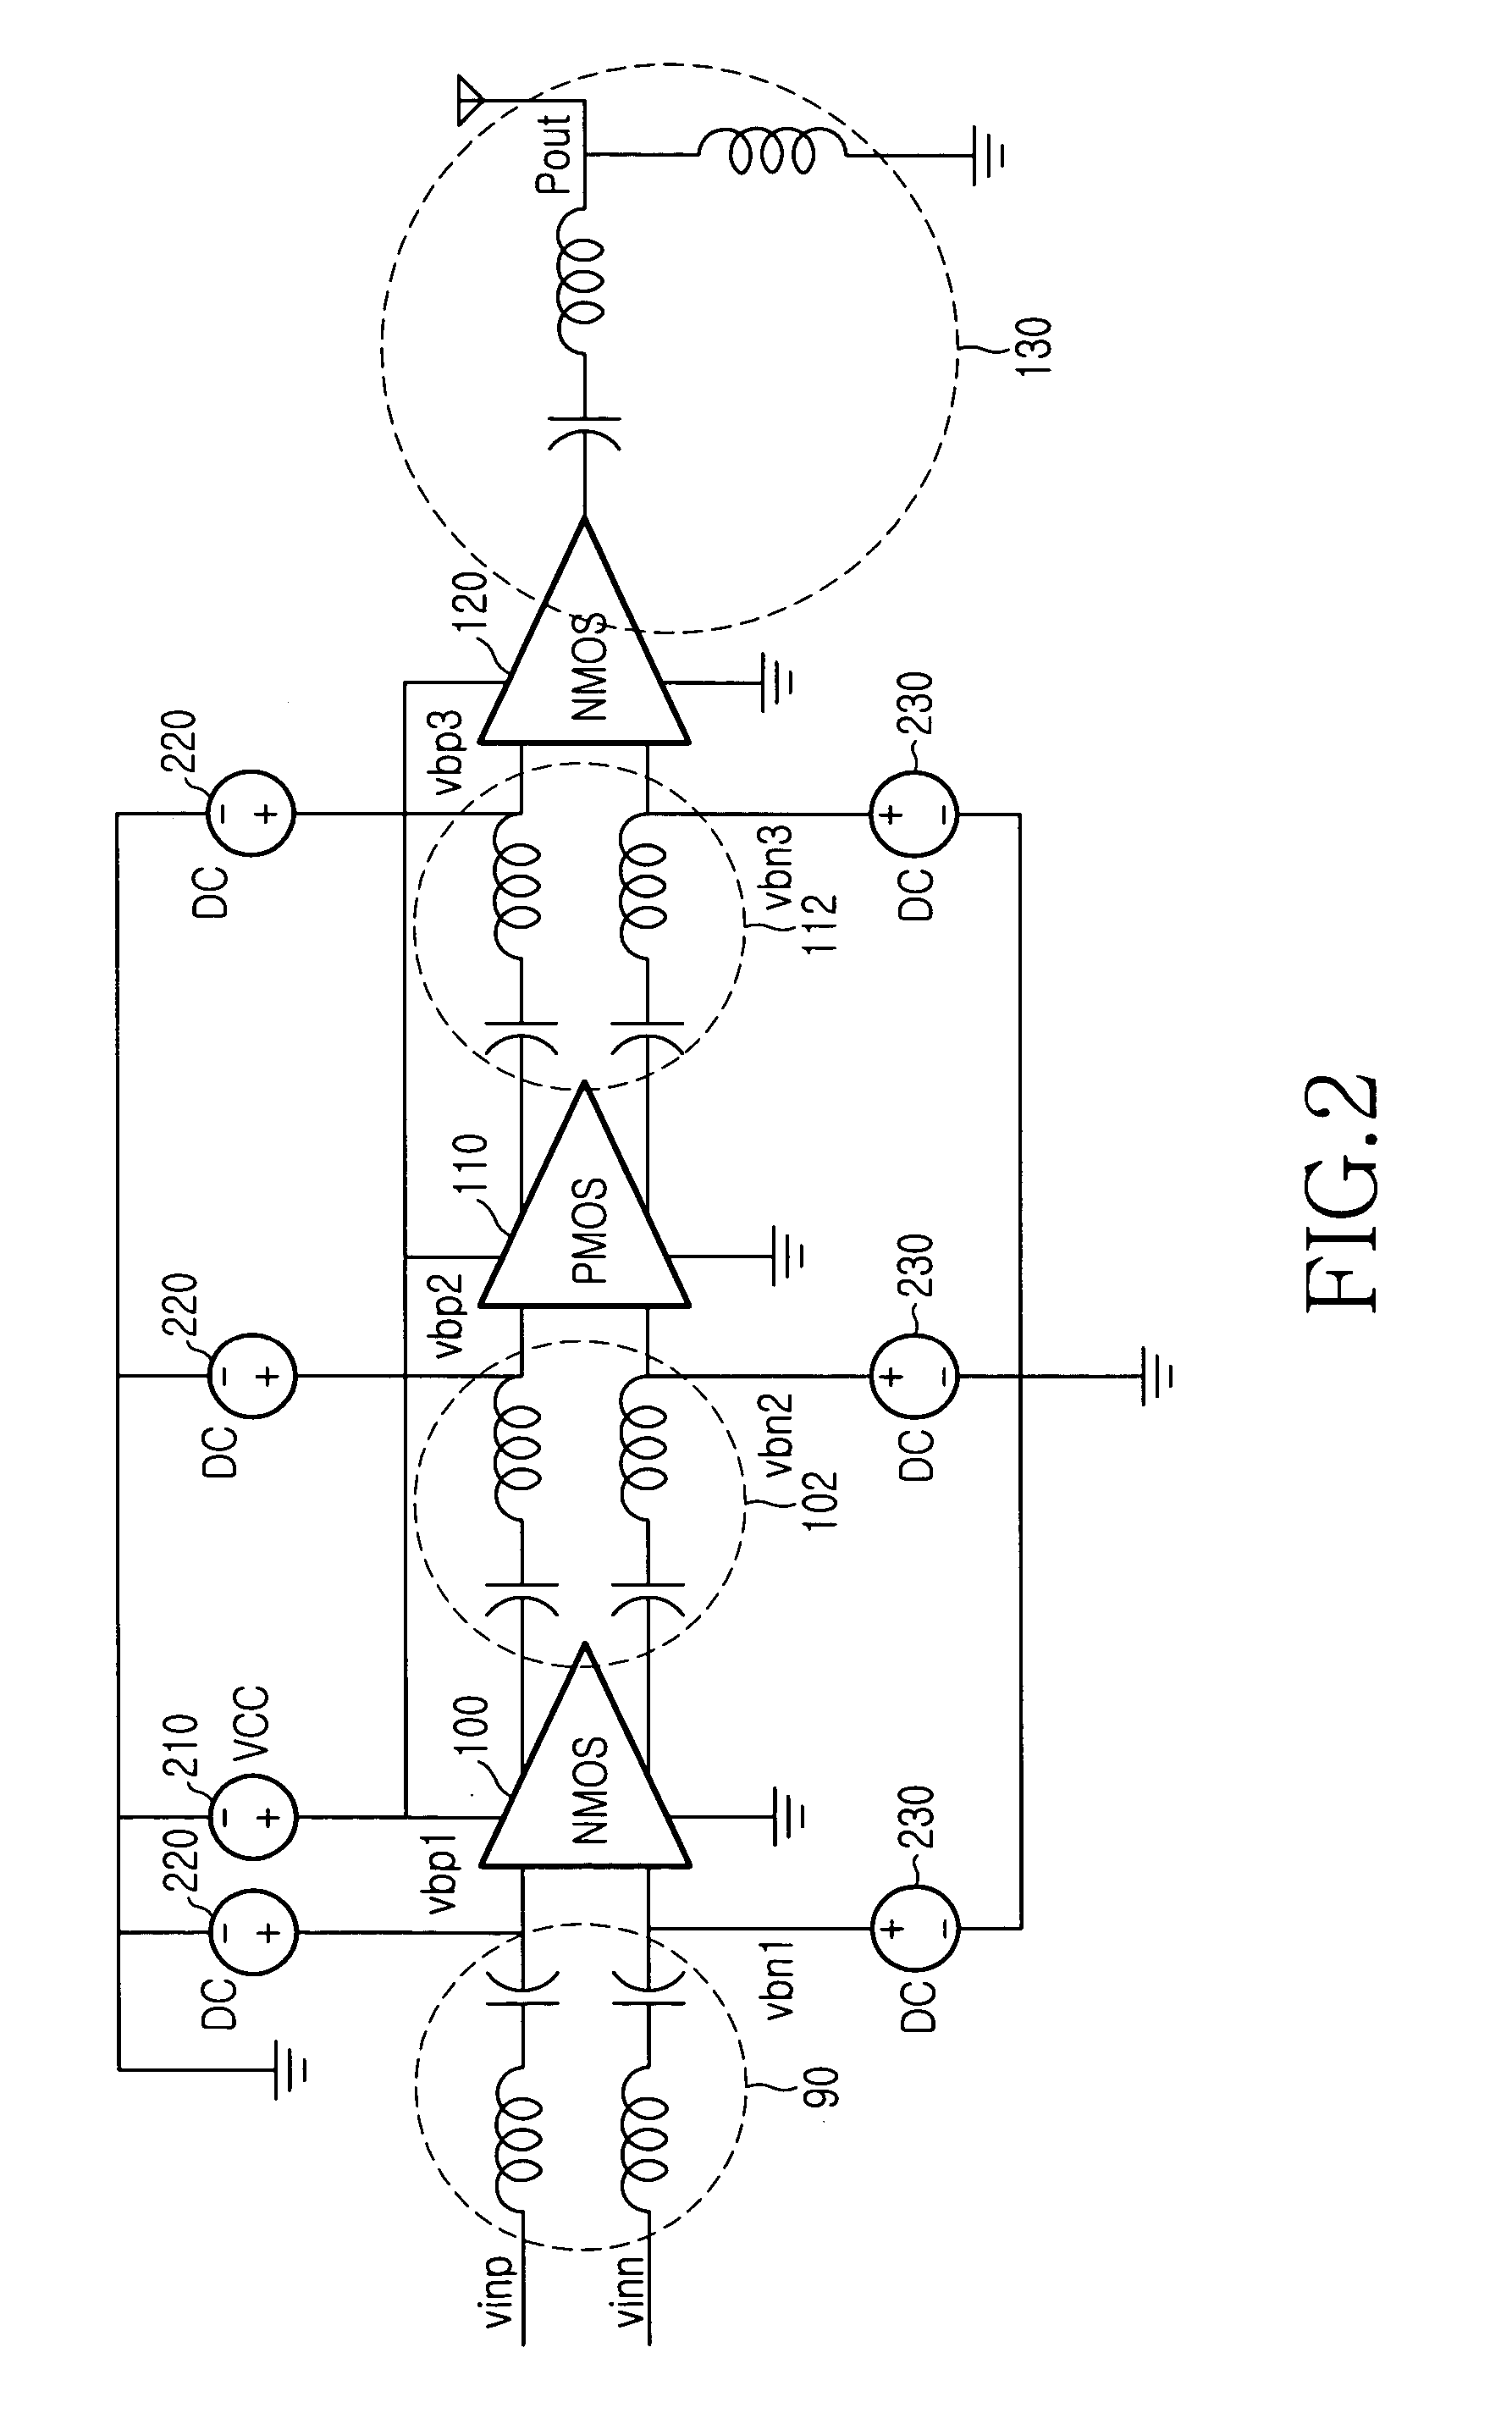 Power amplifier for a transmitter